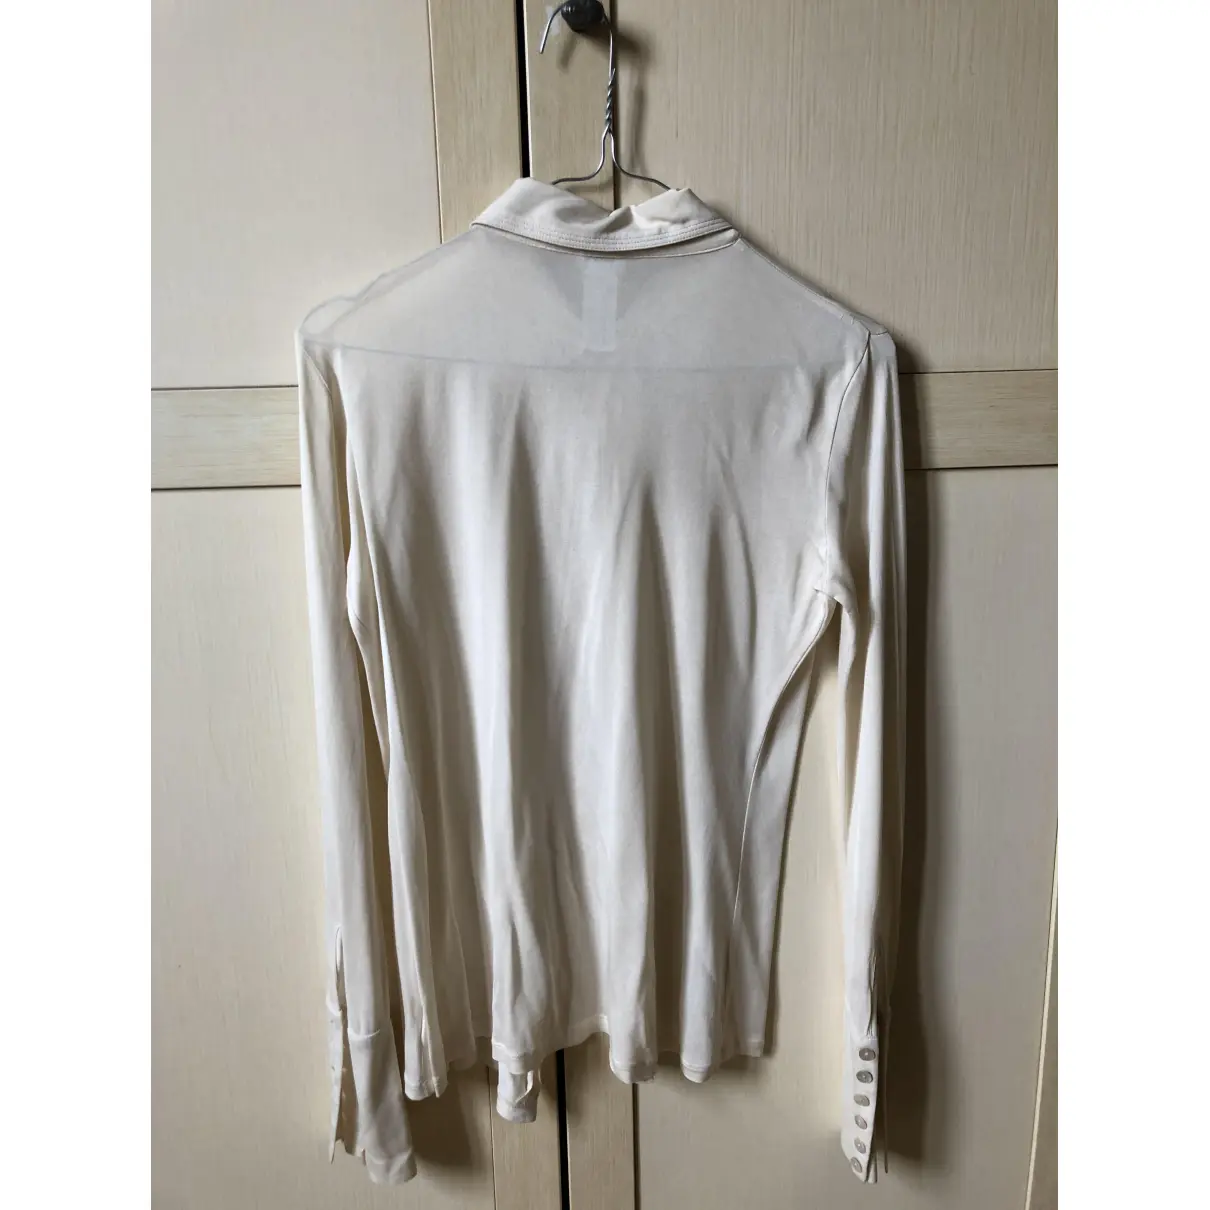 Buy INTIMISSIMI Silk blouse online